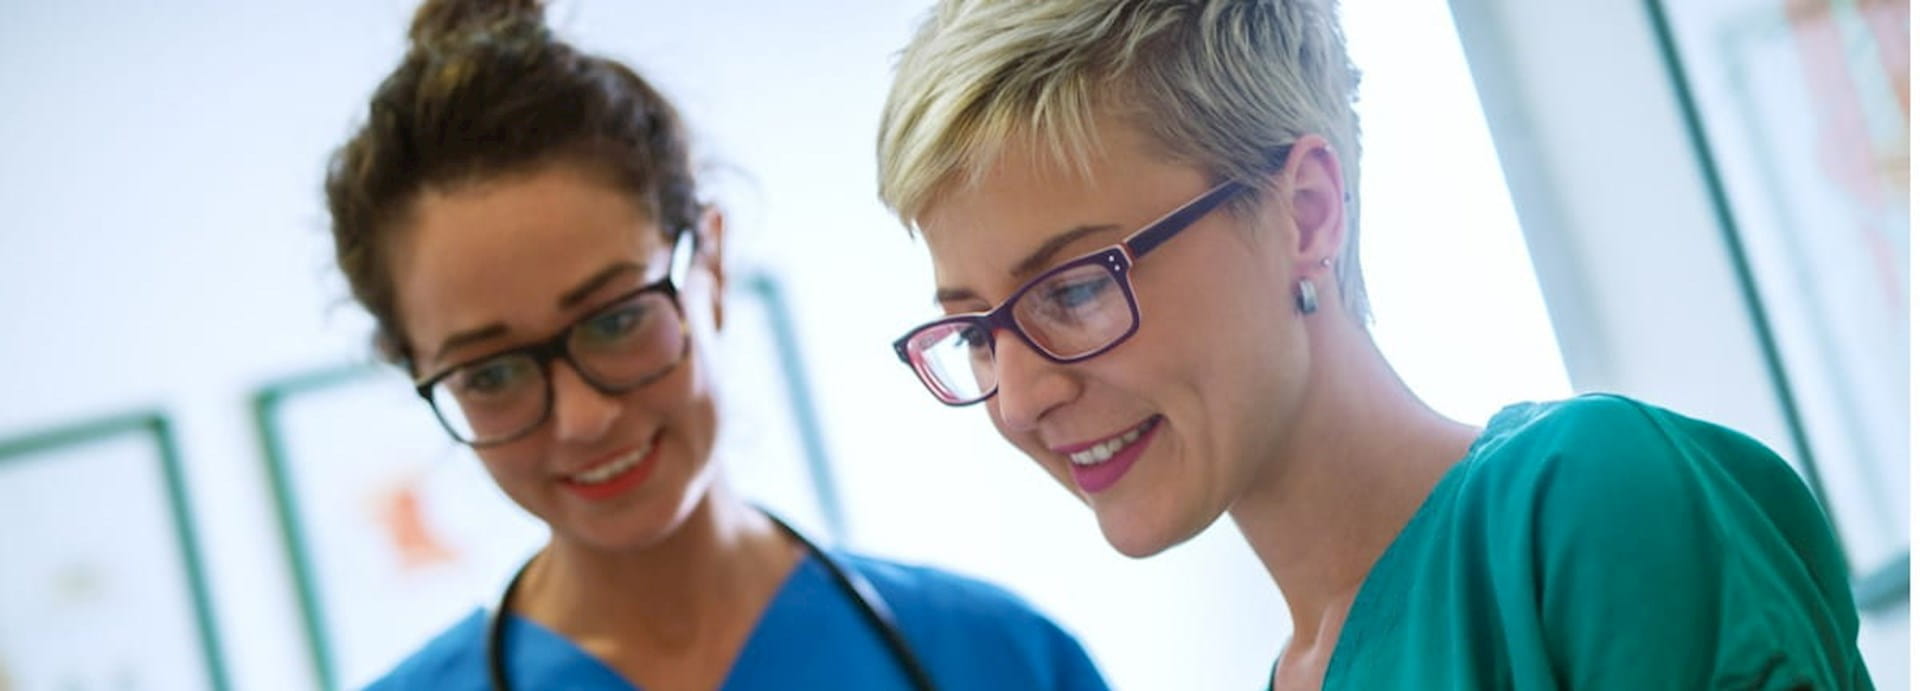 MDDUS | Medical Advisory Guide two professional nurses